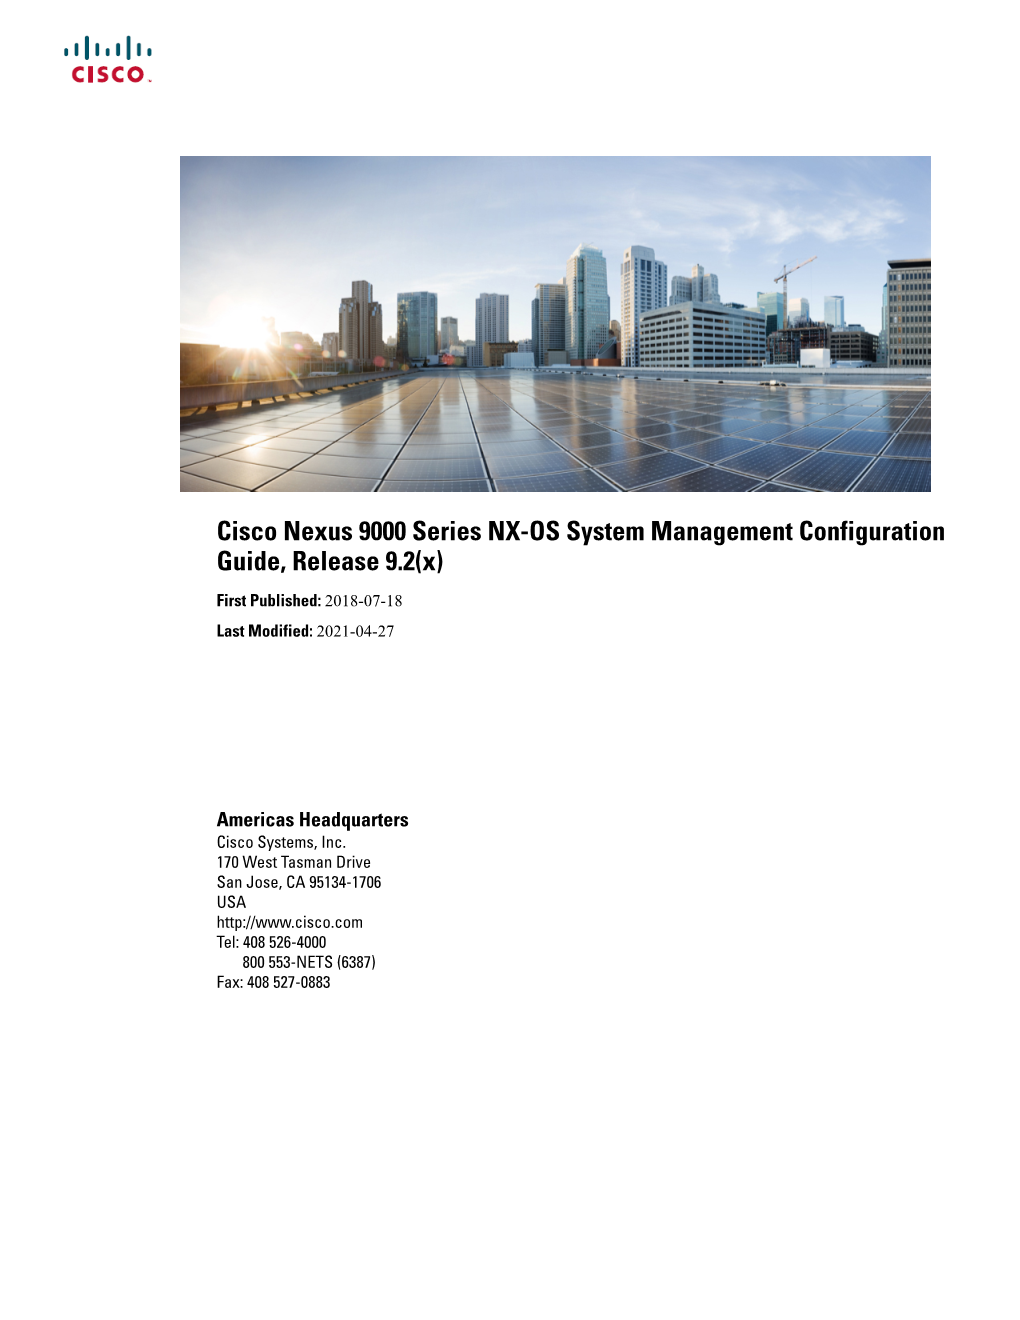 Cisco Nexus 9000 Series NX-OS System Management Configuration Guide, Release 9.2(X)